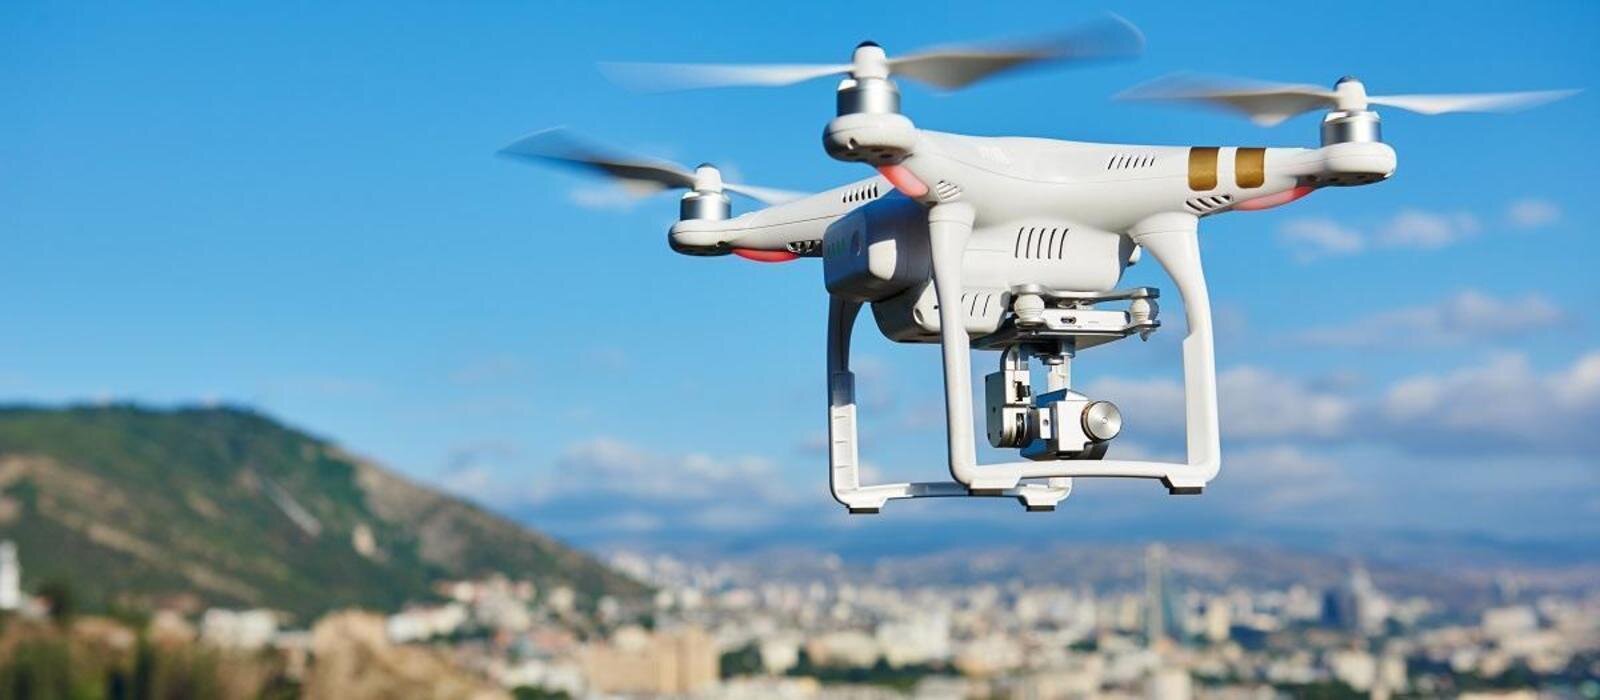 More information about "Δημοσιεύθηκαν οι νέοι κανόνες για τα drones στην Ευρωπαϊκή Ένωση"